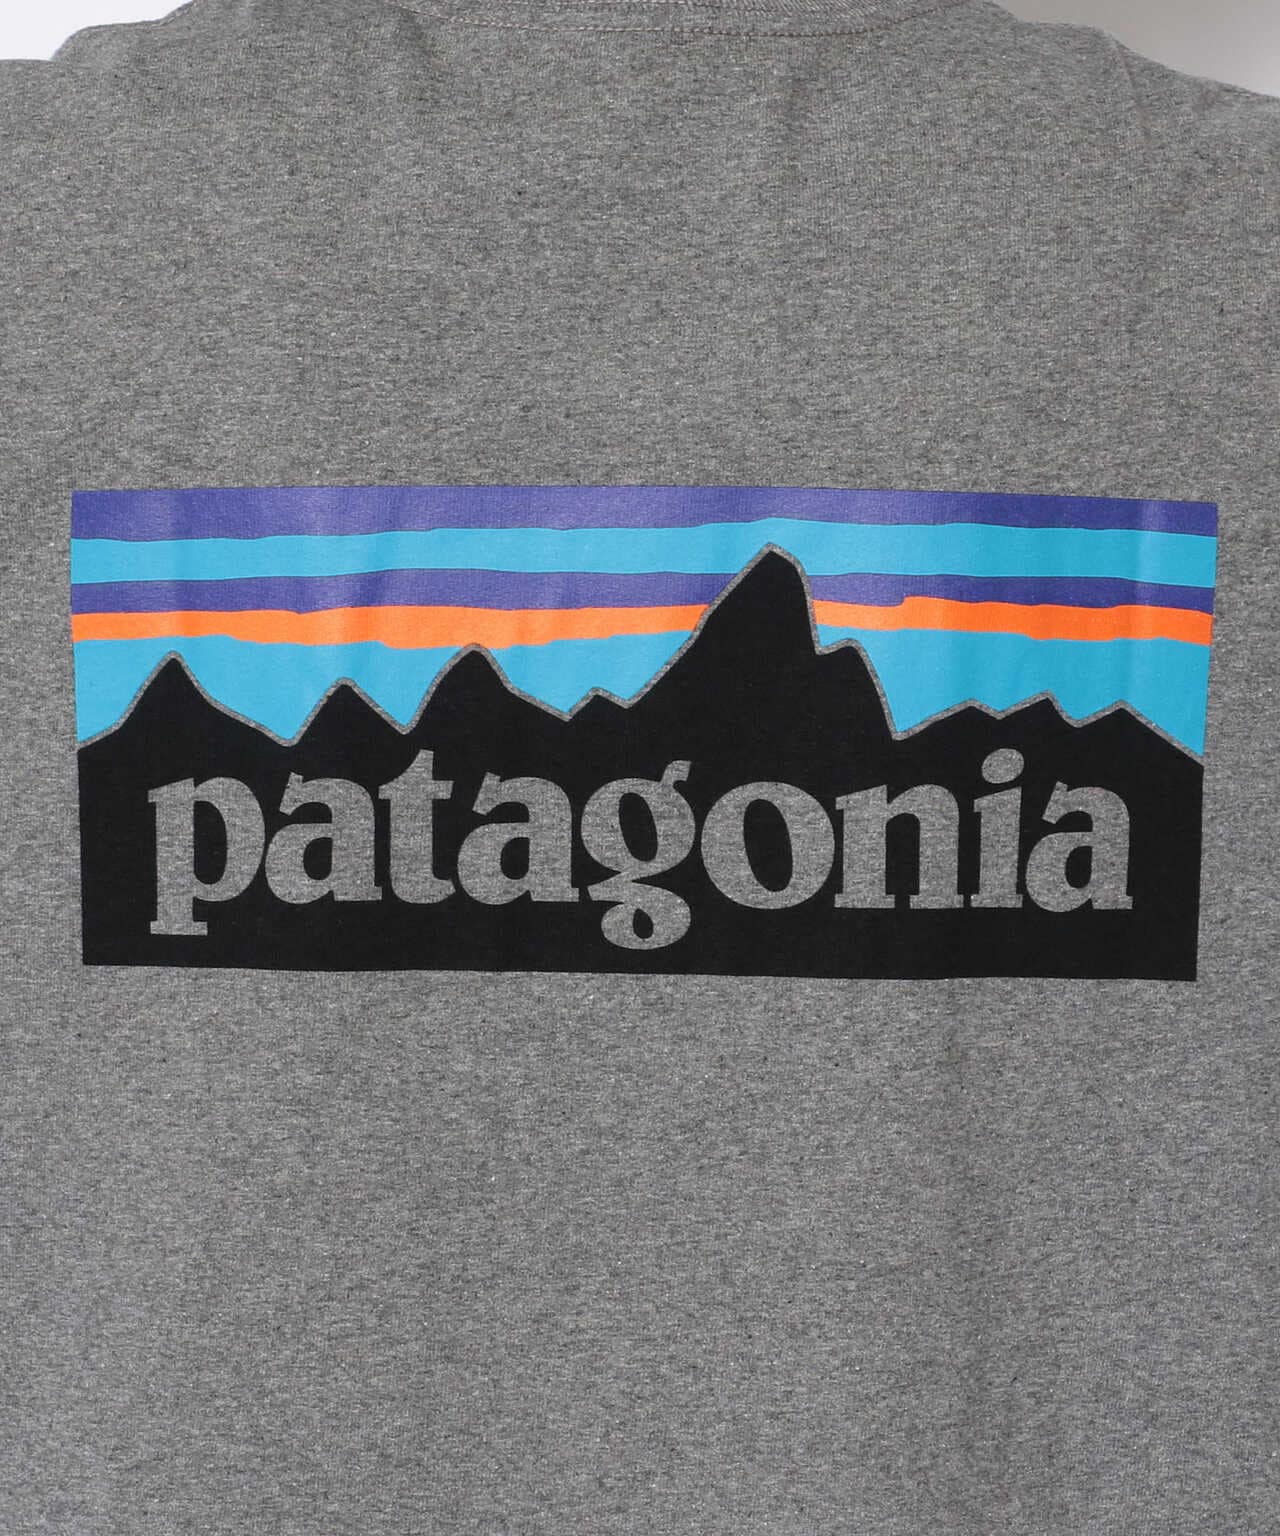 PATAGONIA/パタゴニア ロングスリーブ・P-6ロゴ・レスポンシビリティー(38518) 長袖Tシャツ